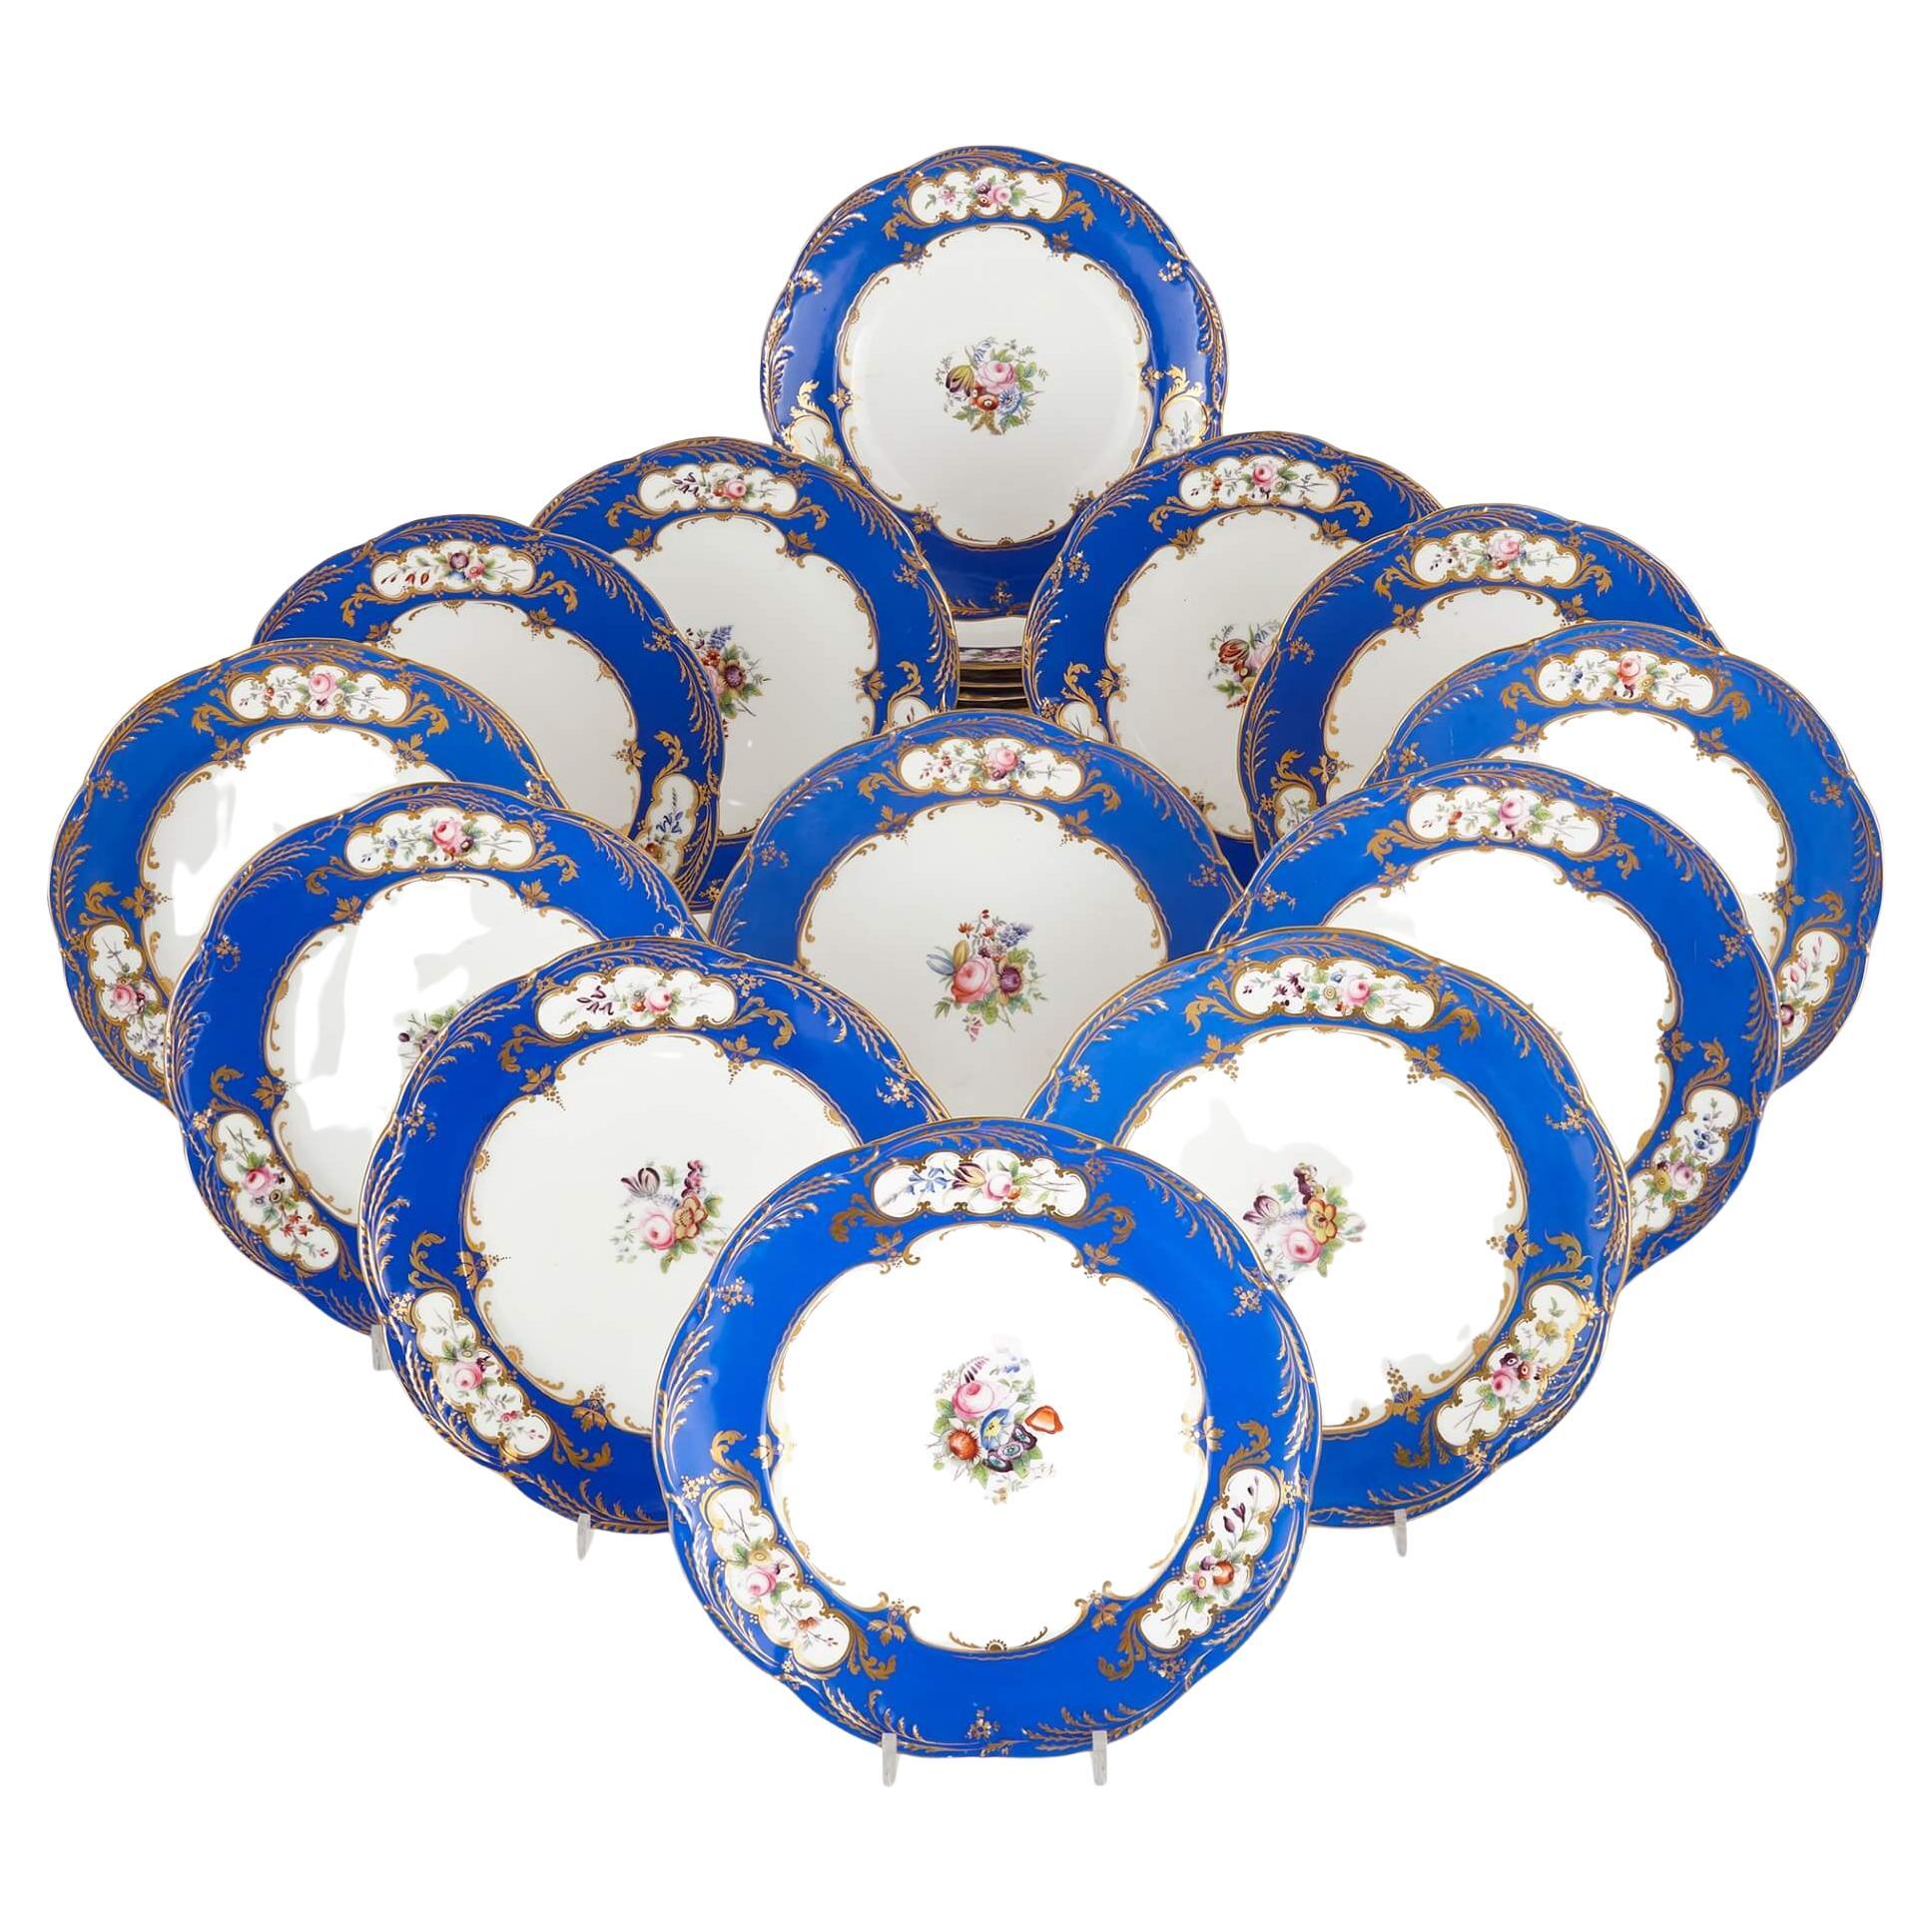 Set of twenty four blue and white floral porcelain dinner plates